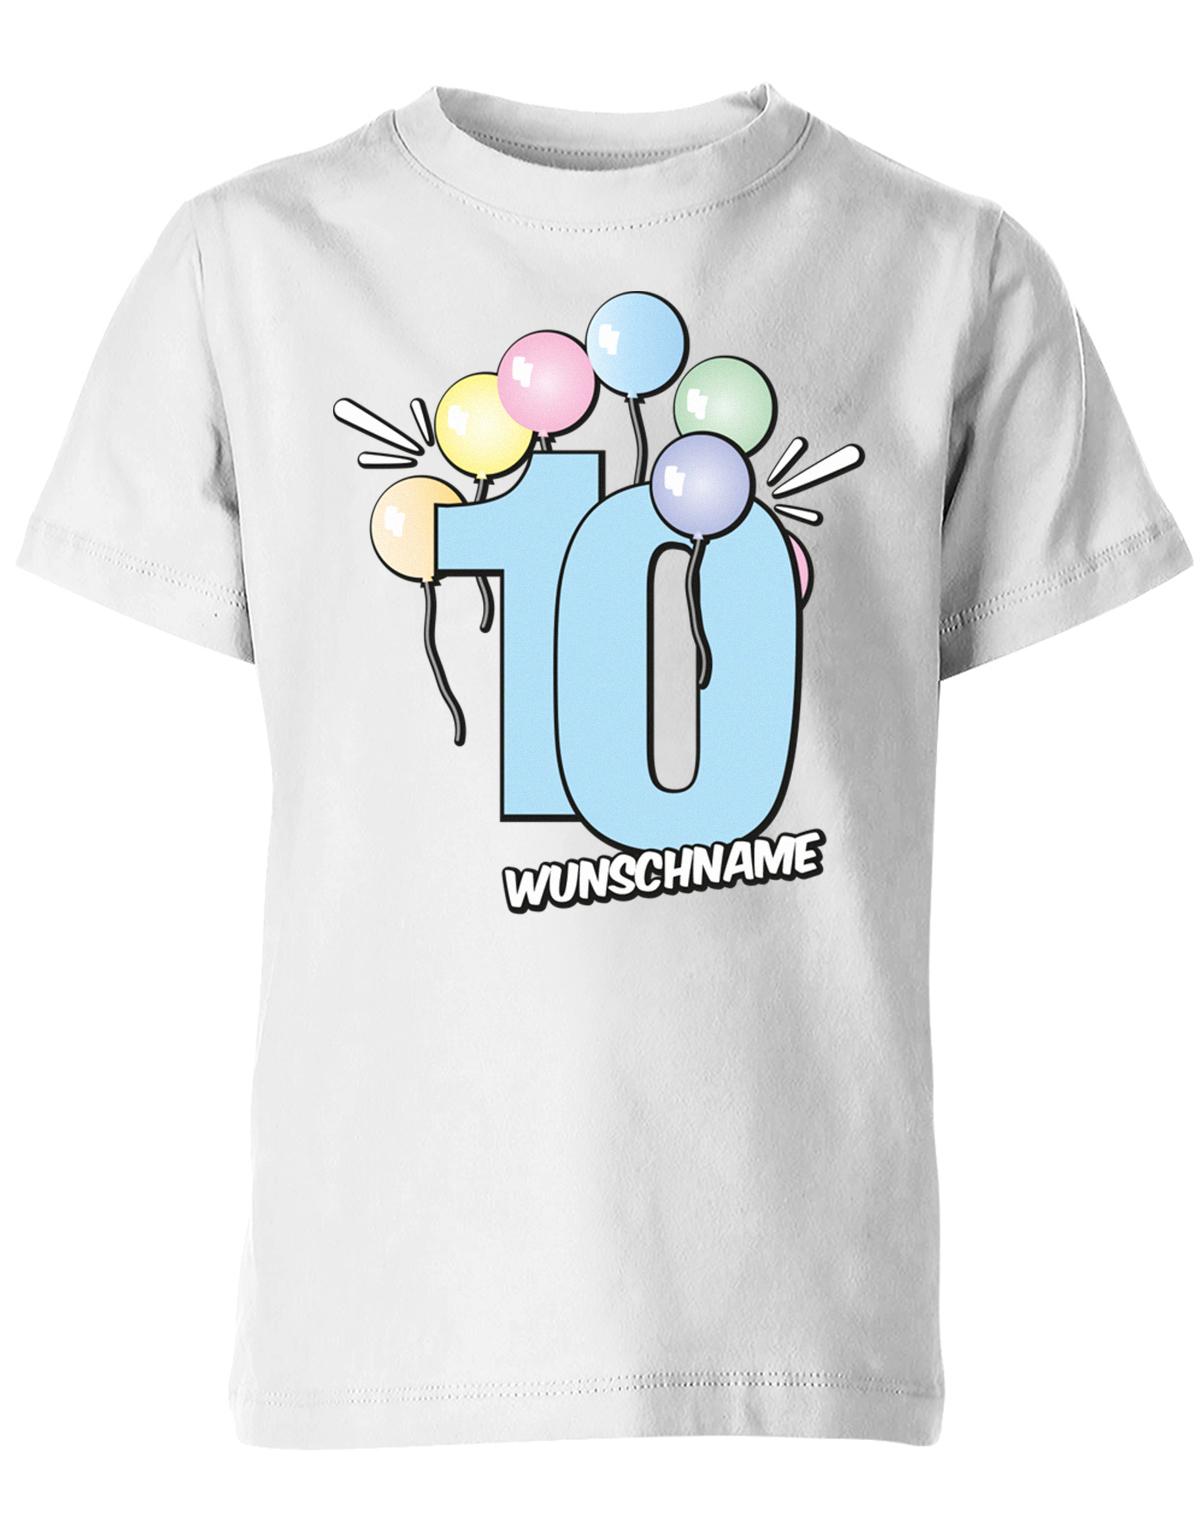 Luftballons-pastell-10-geburtstag-wunschname-kinder-shirt-weiss